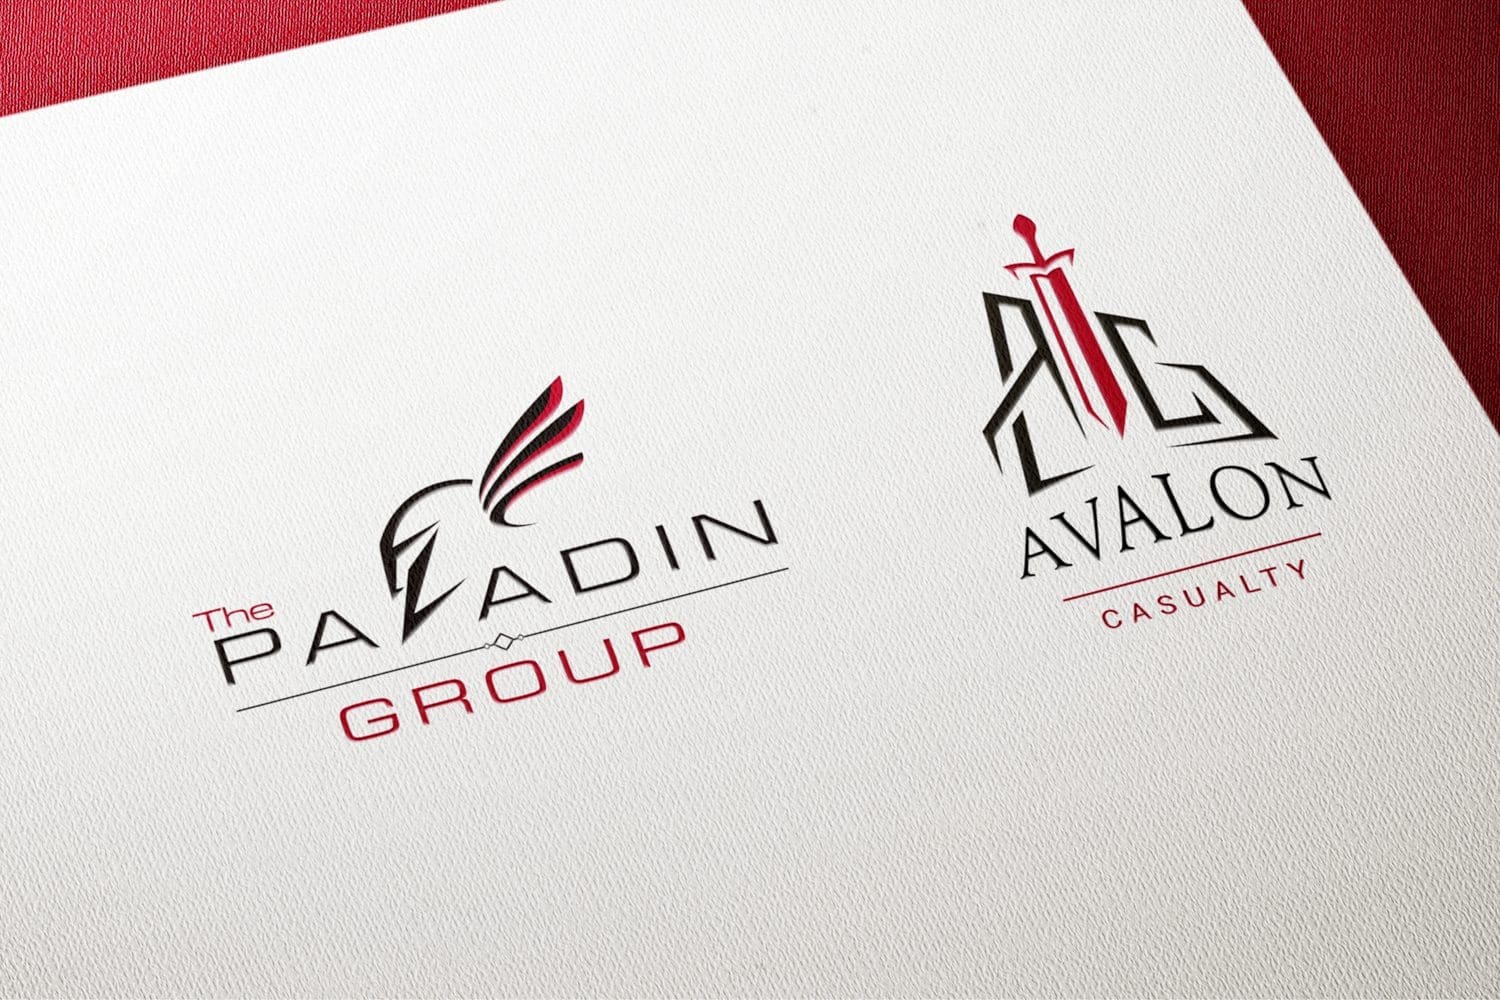 The Paladin Group logo Avalon Casualty logo